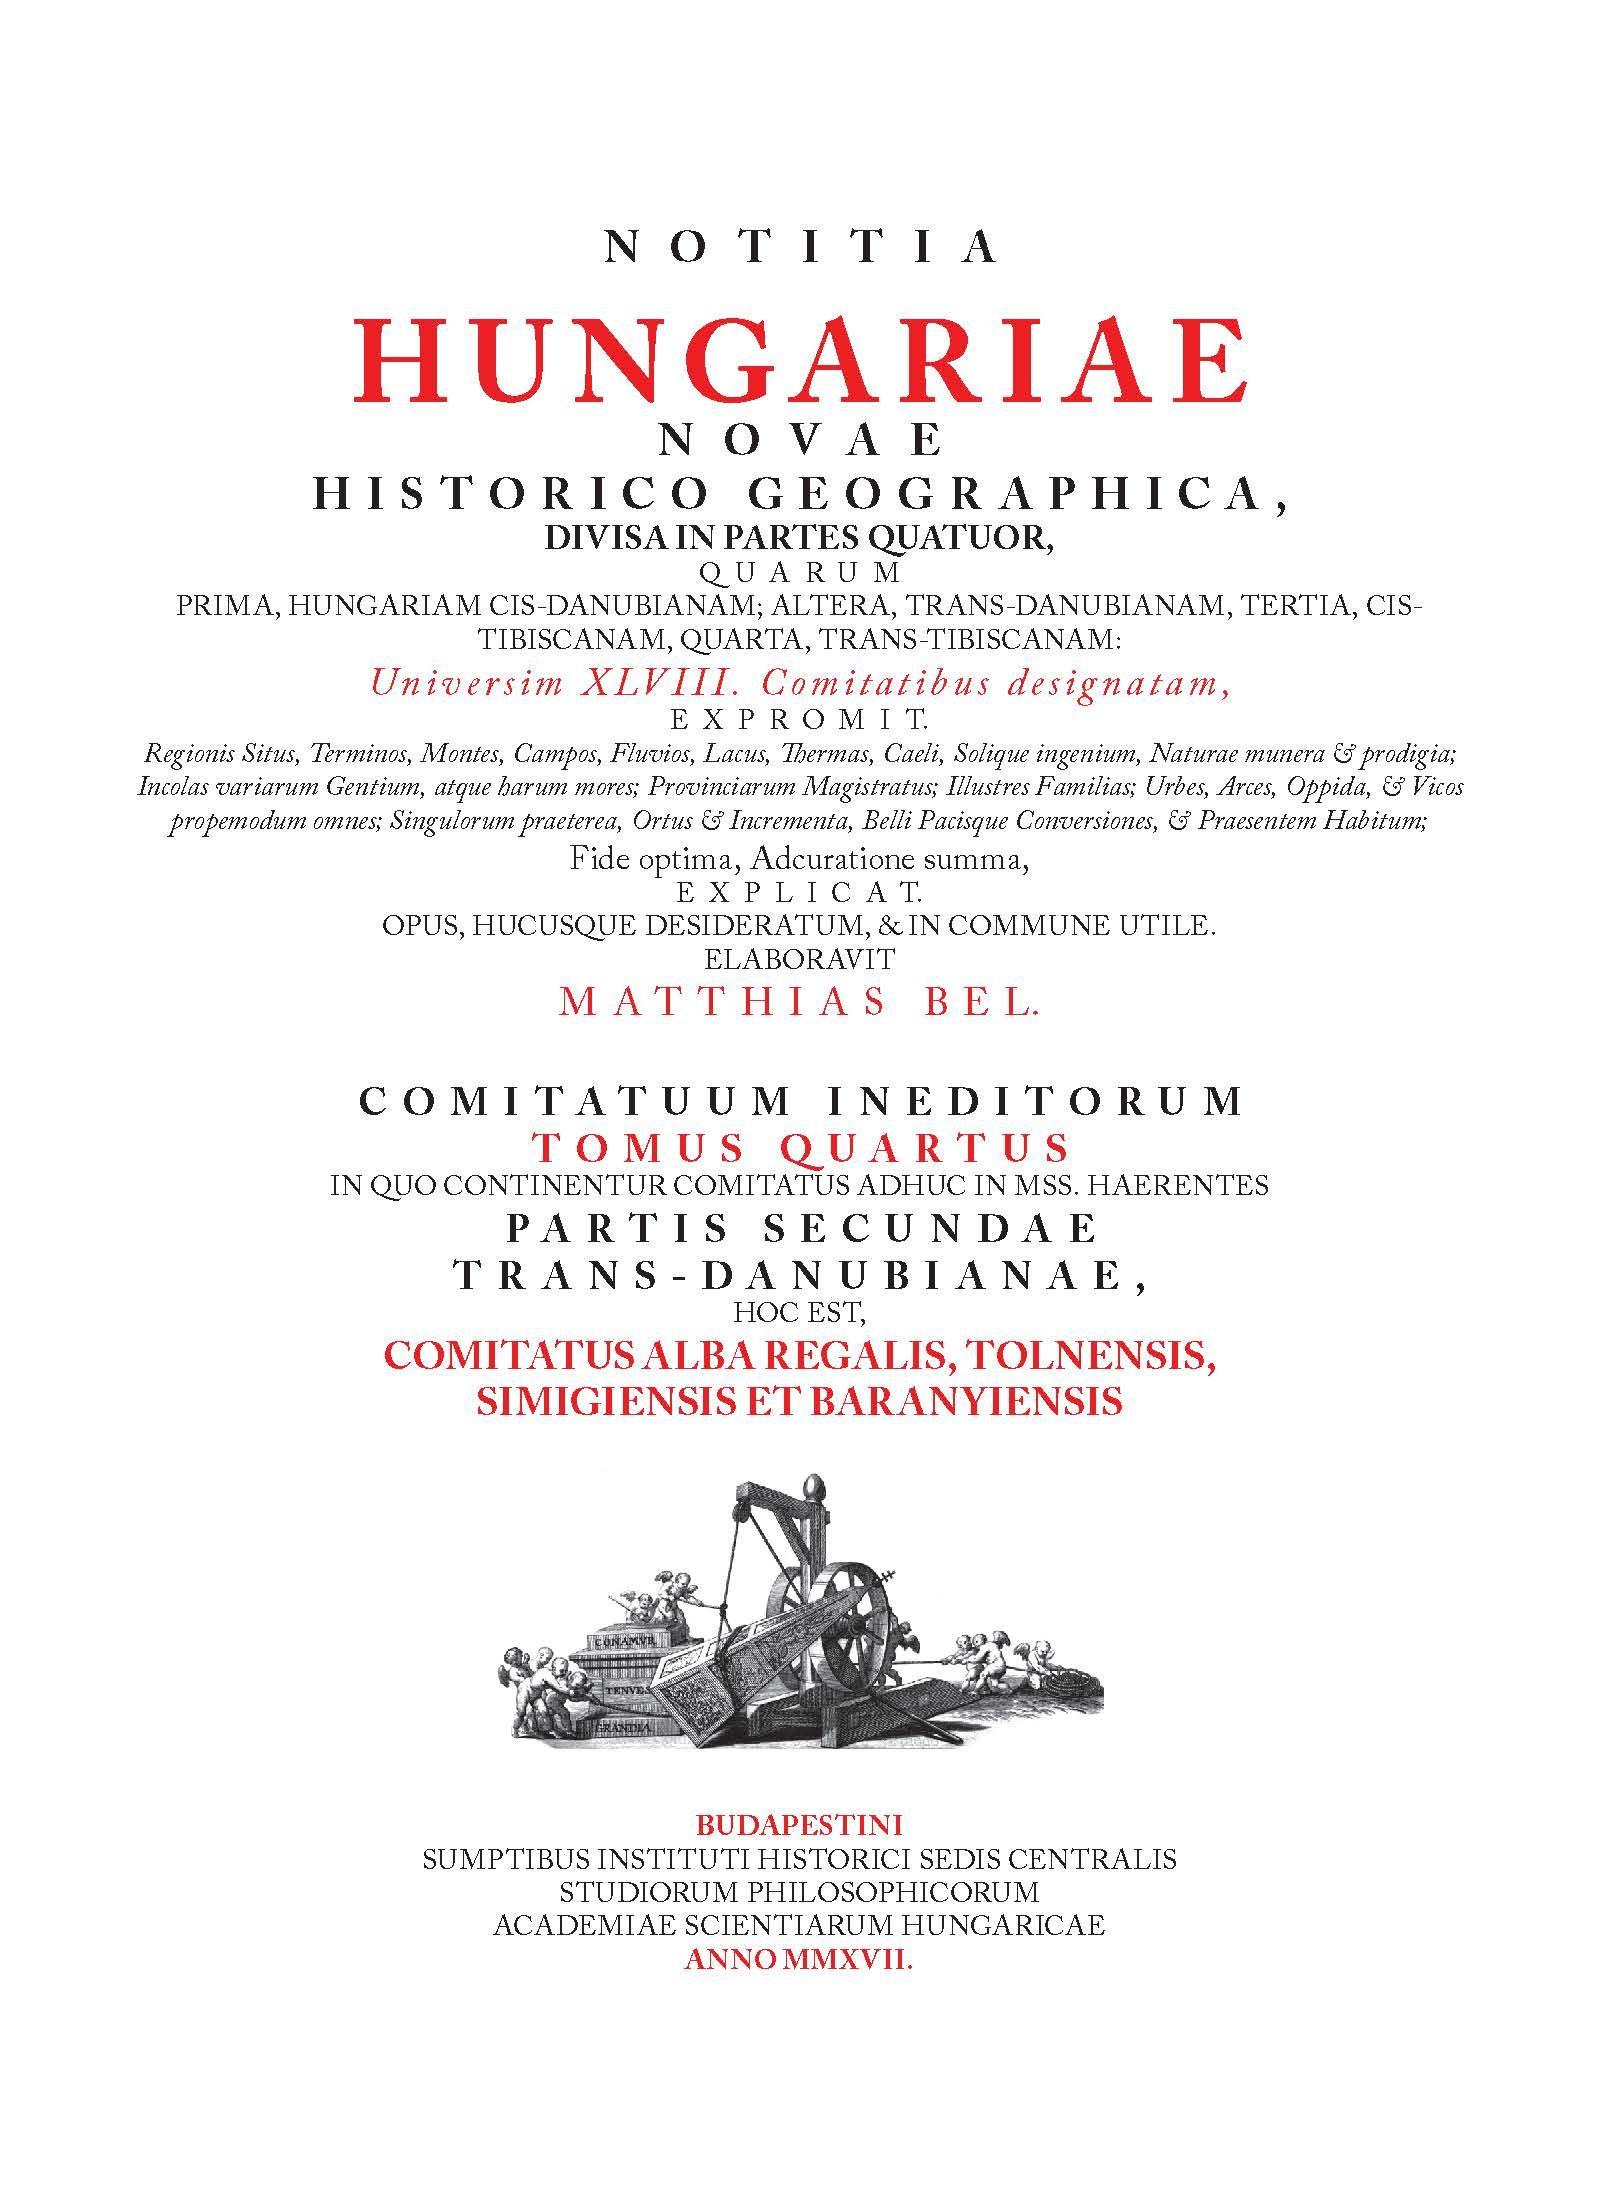 Matthias Bel (Bél Mátyás) - A Notitia Hungariae novae historico geographica...